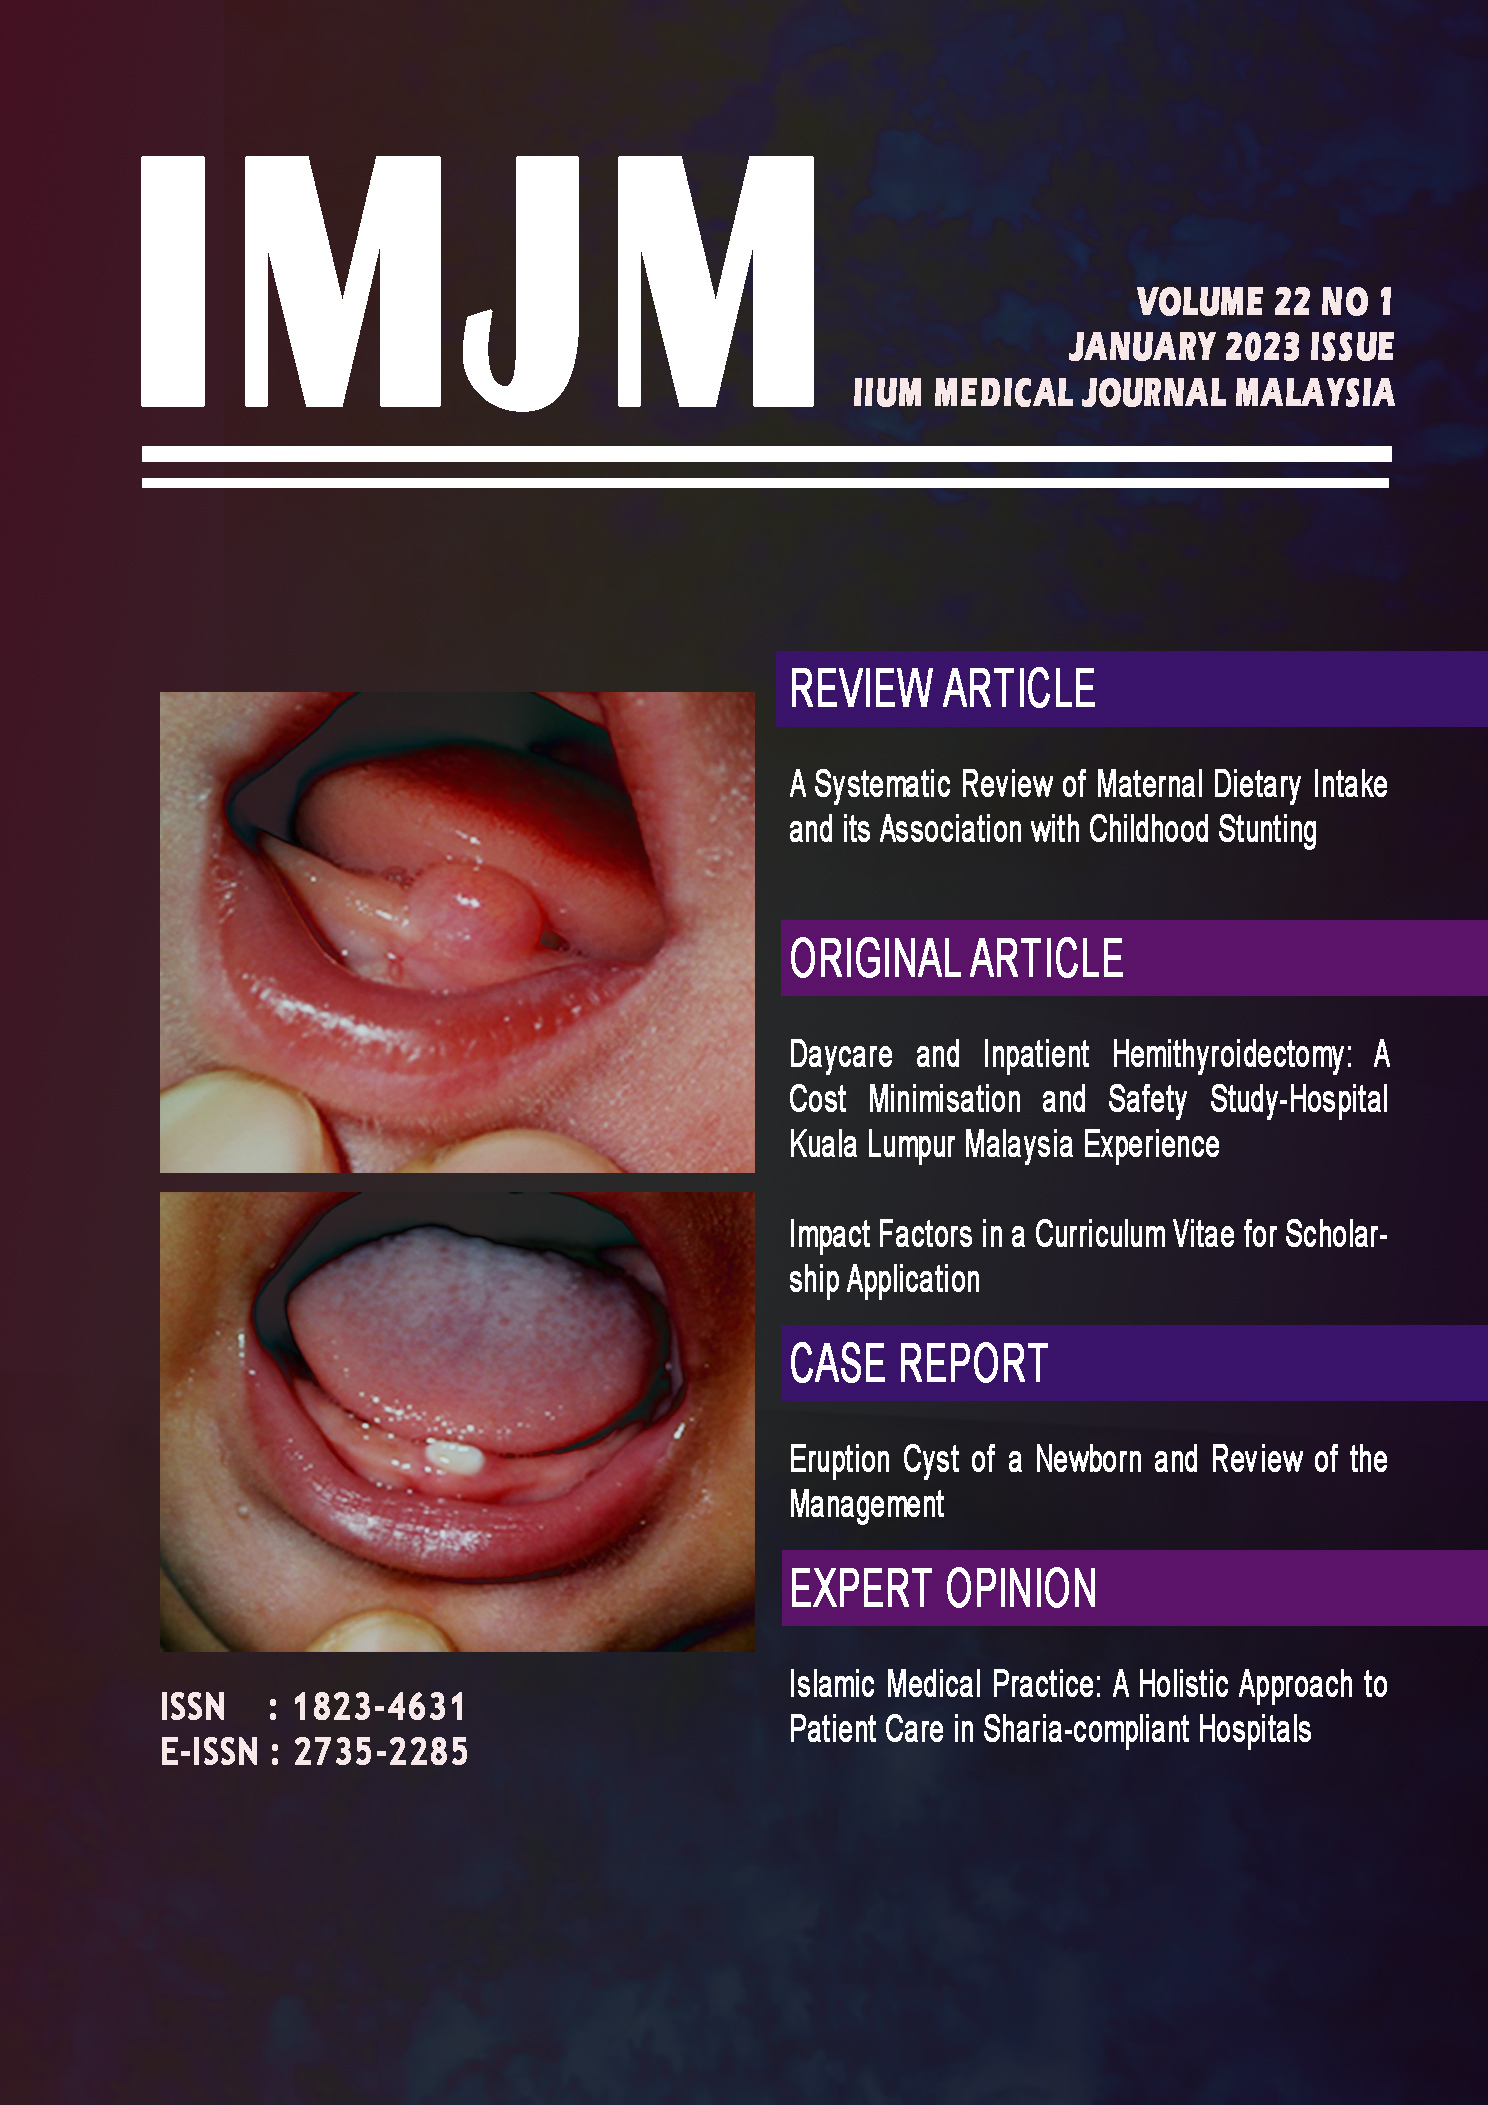 					View Vol. 22 No. 1 (2023): IIUM Medical Journal Malaysia - January 2023
				